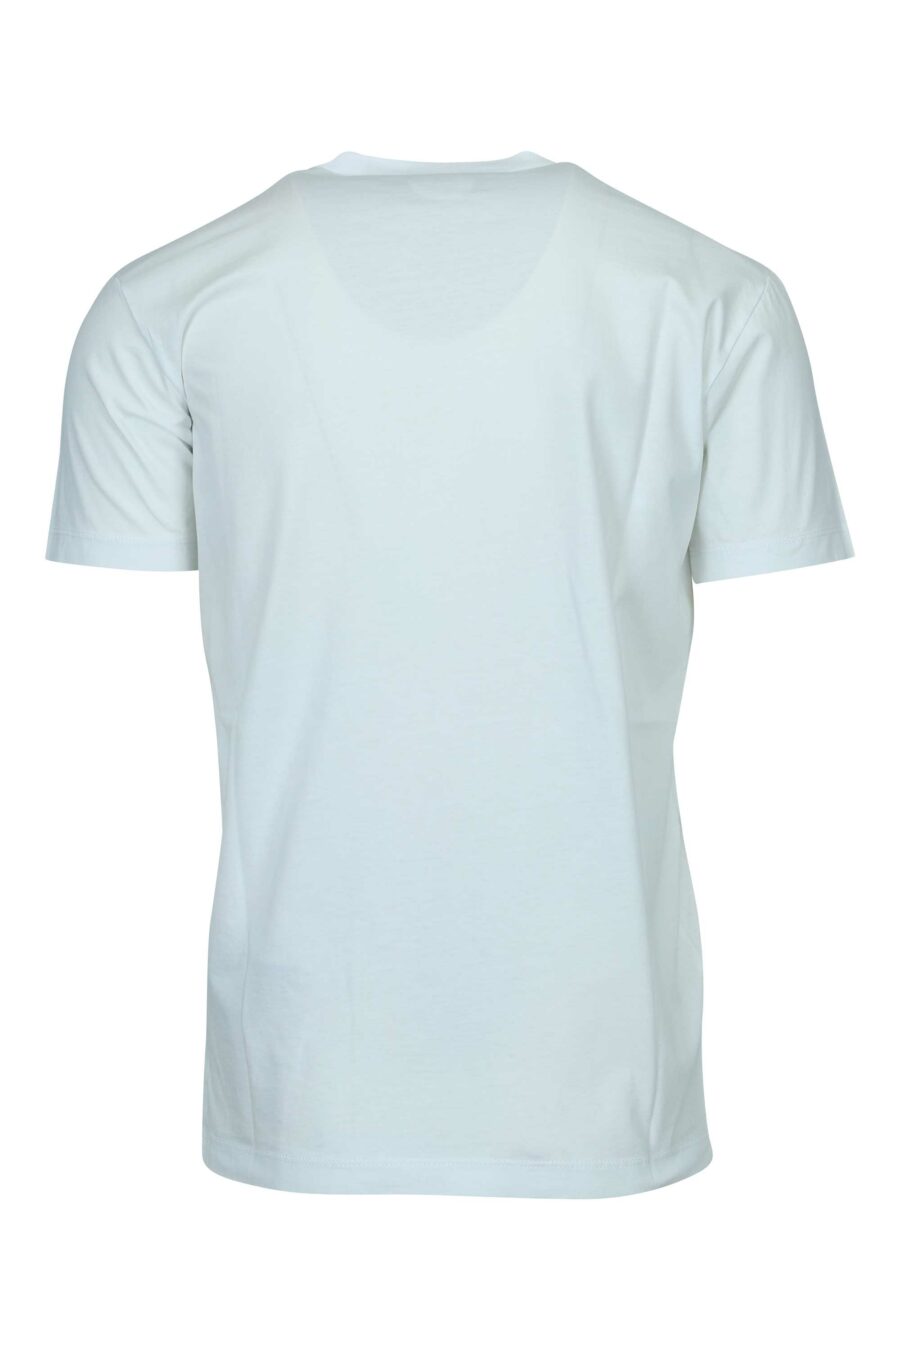 White T-shirt with multicoloured retro maxilogo - 8054148447434 1 2